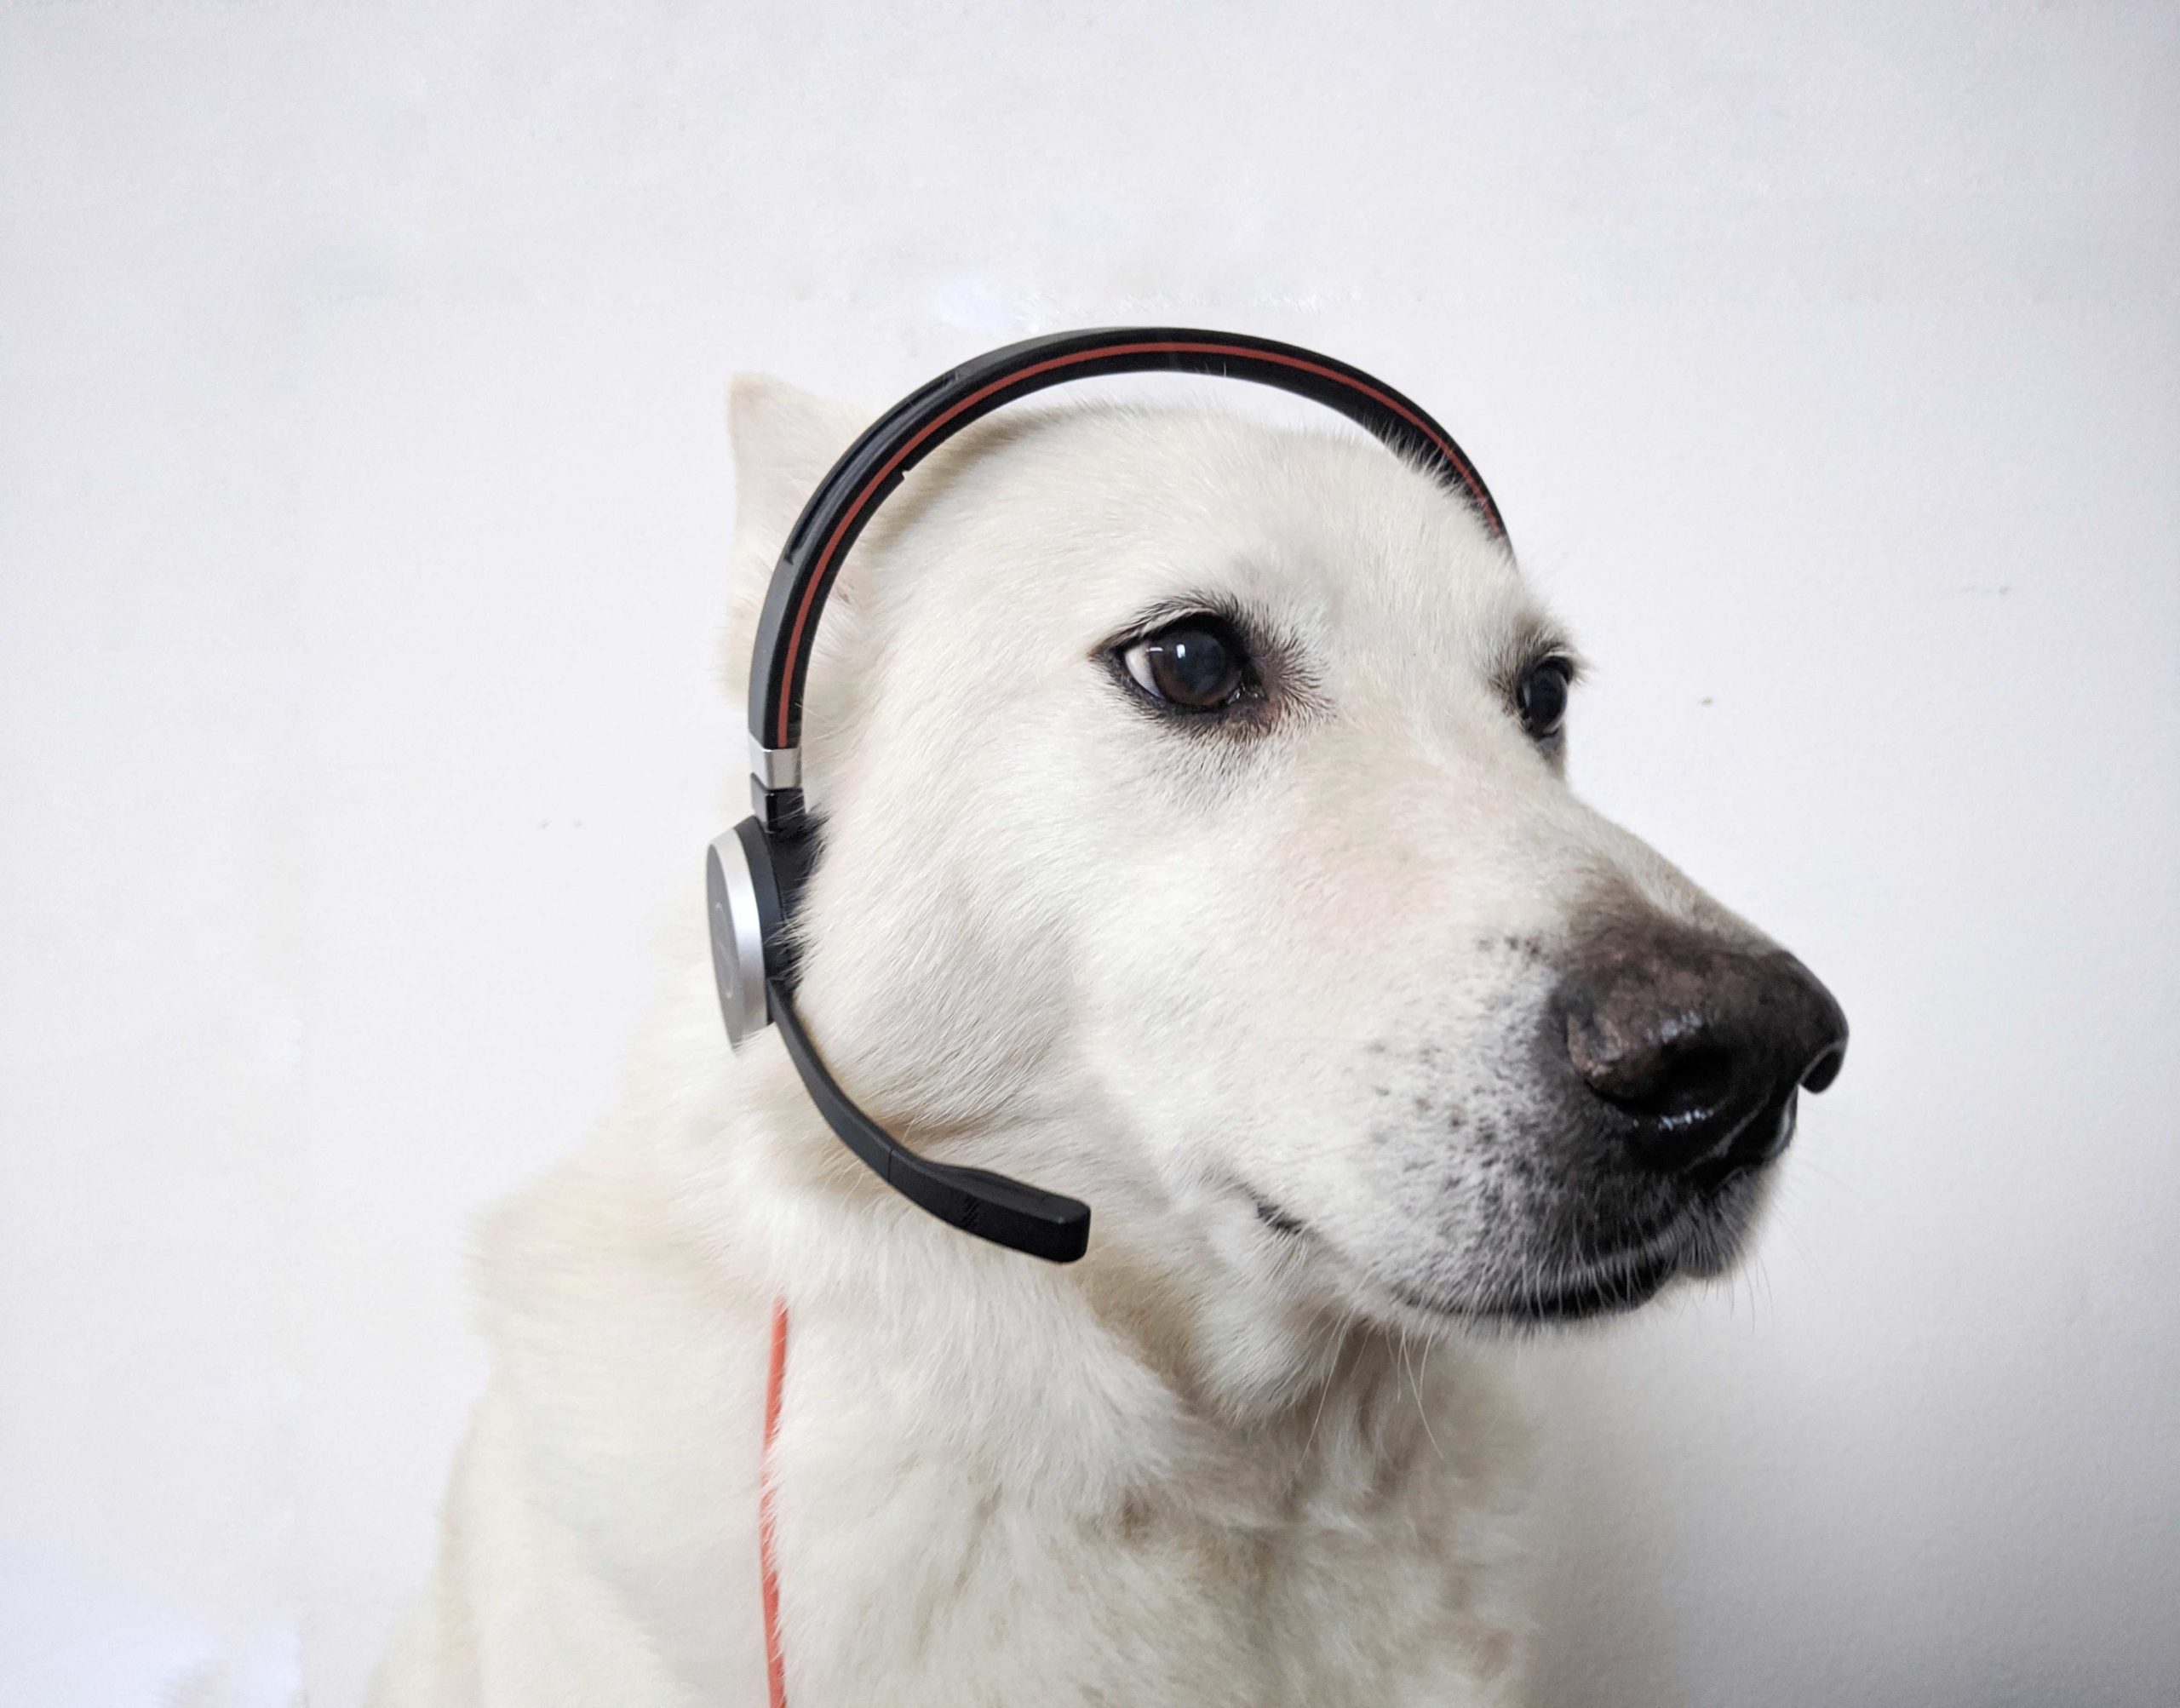 White dog with headphones on.